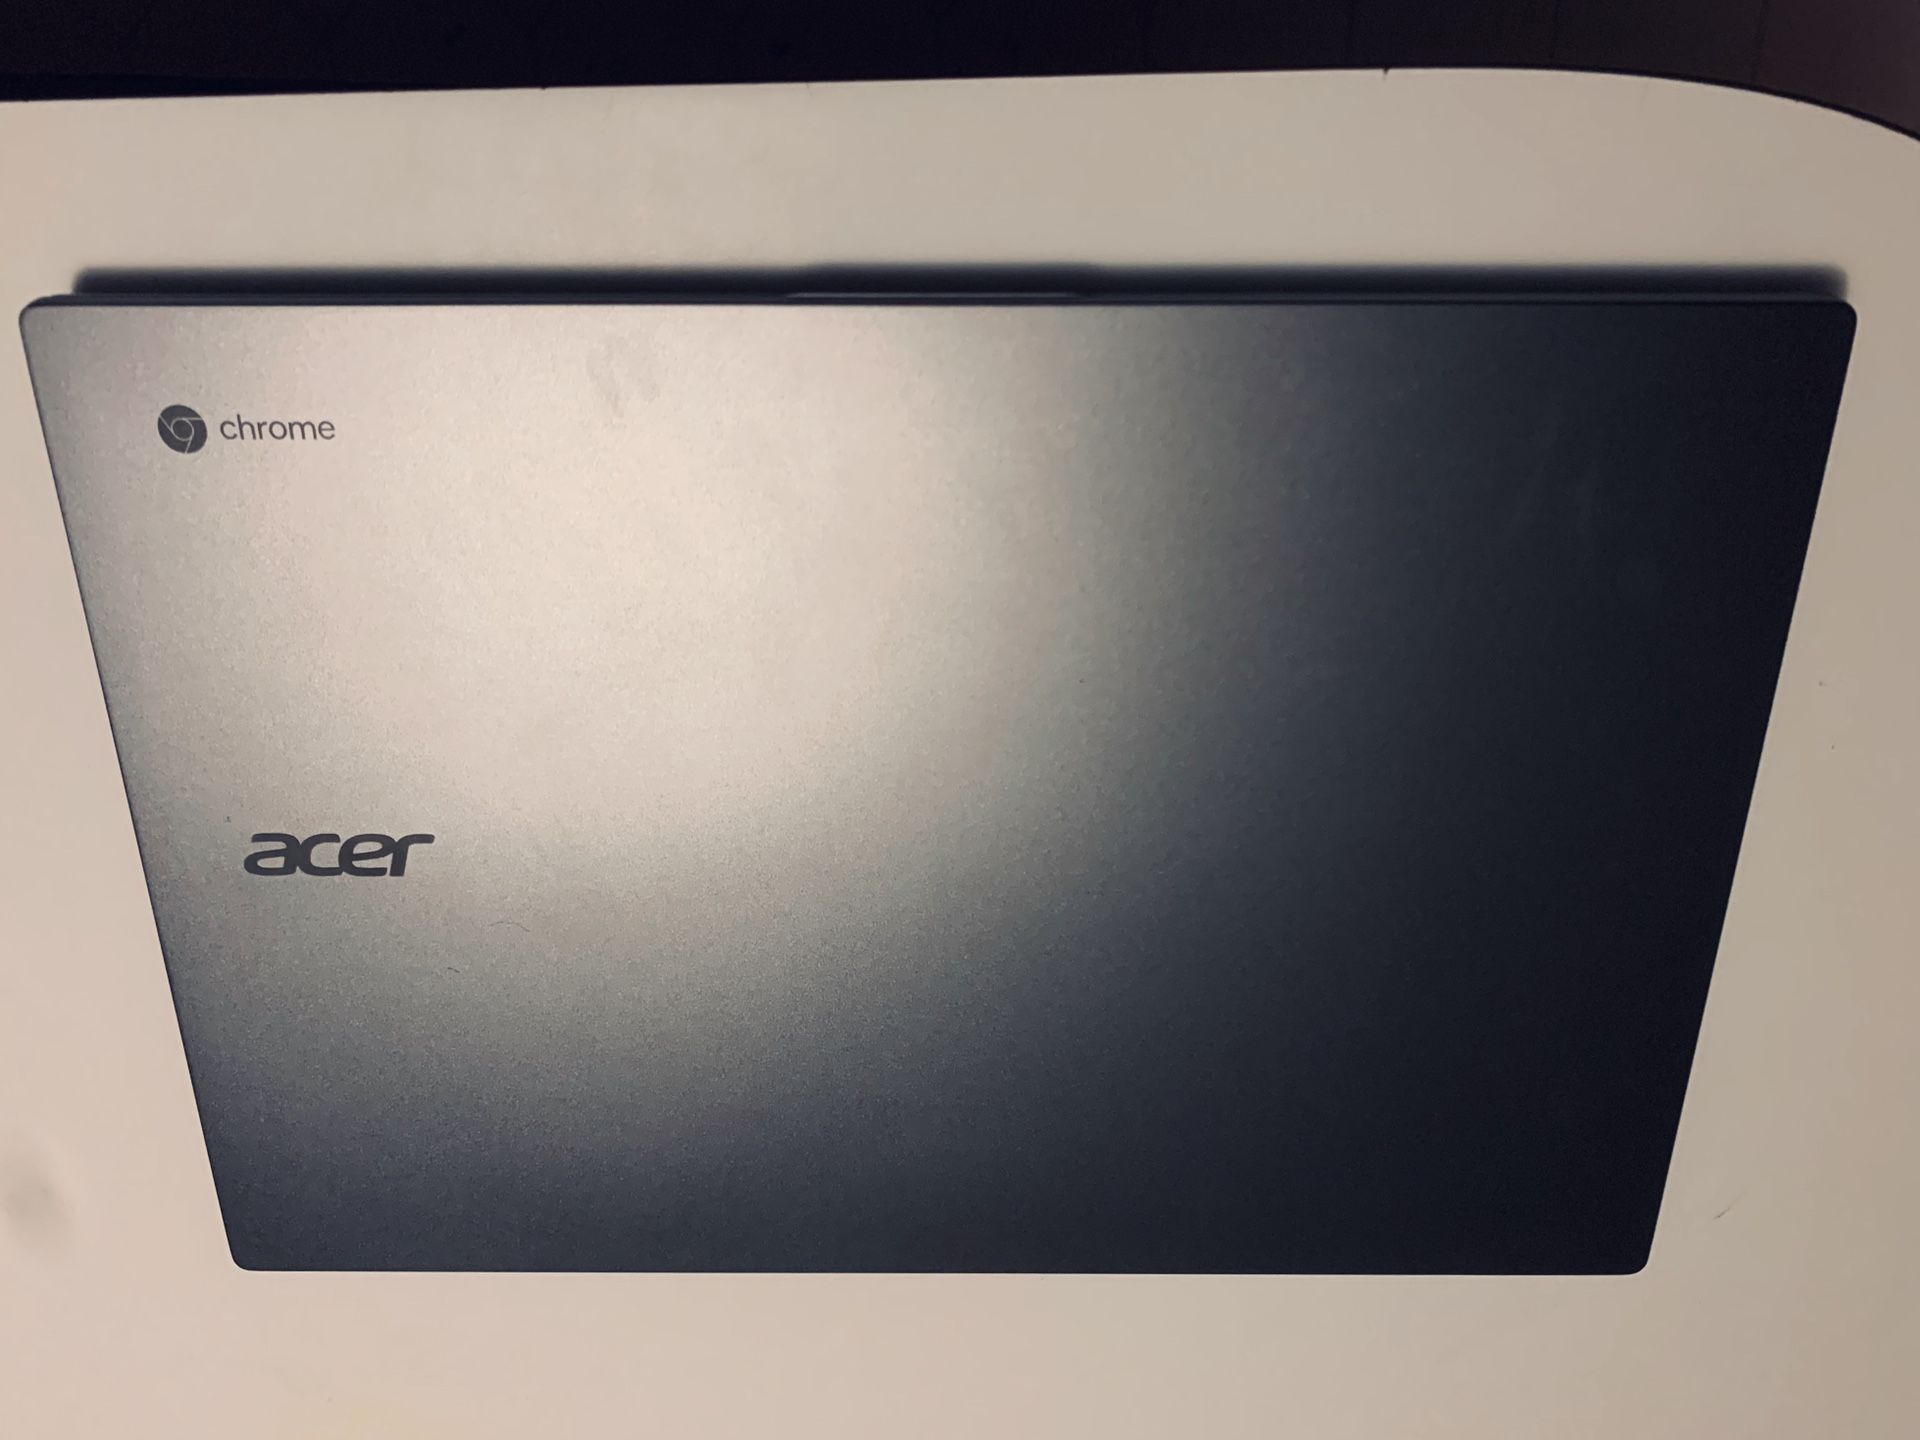 Acer chromebook 15.6 inch laptop